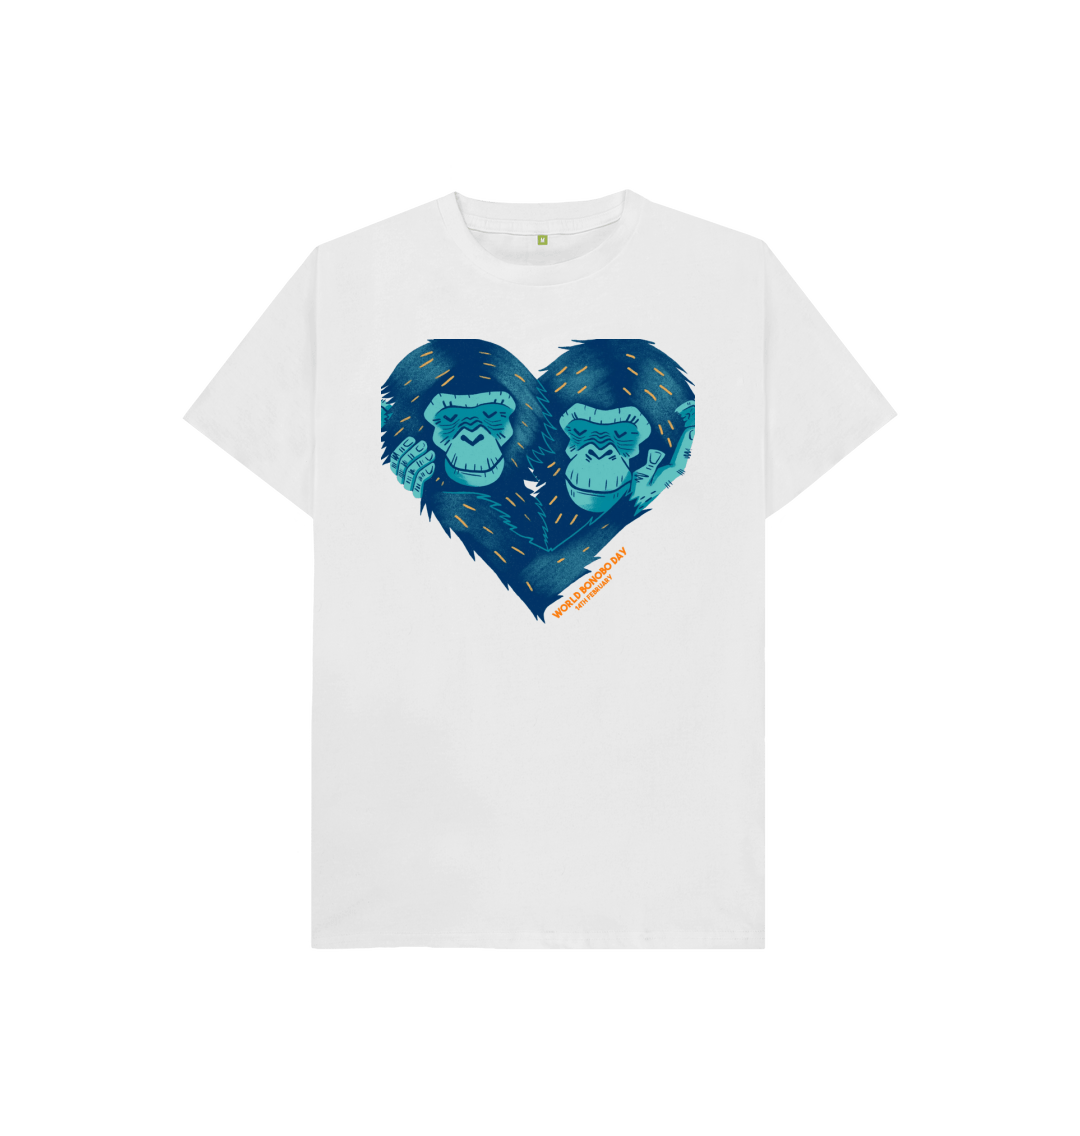 T-shirt Kids World Bonobo Day